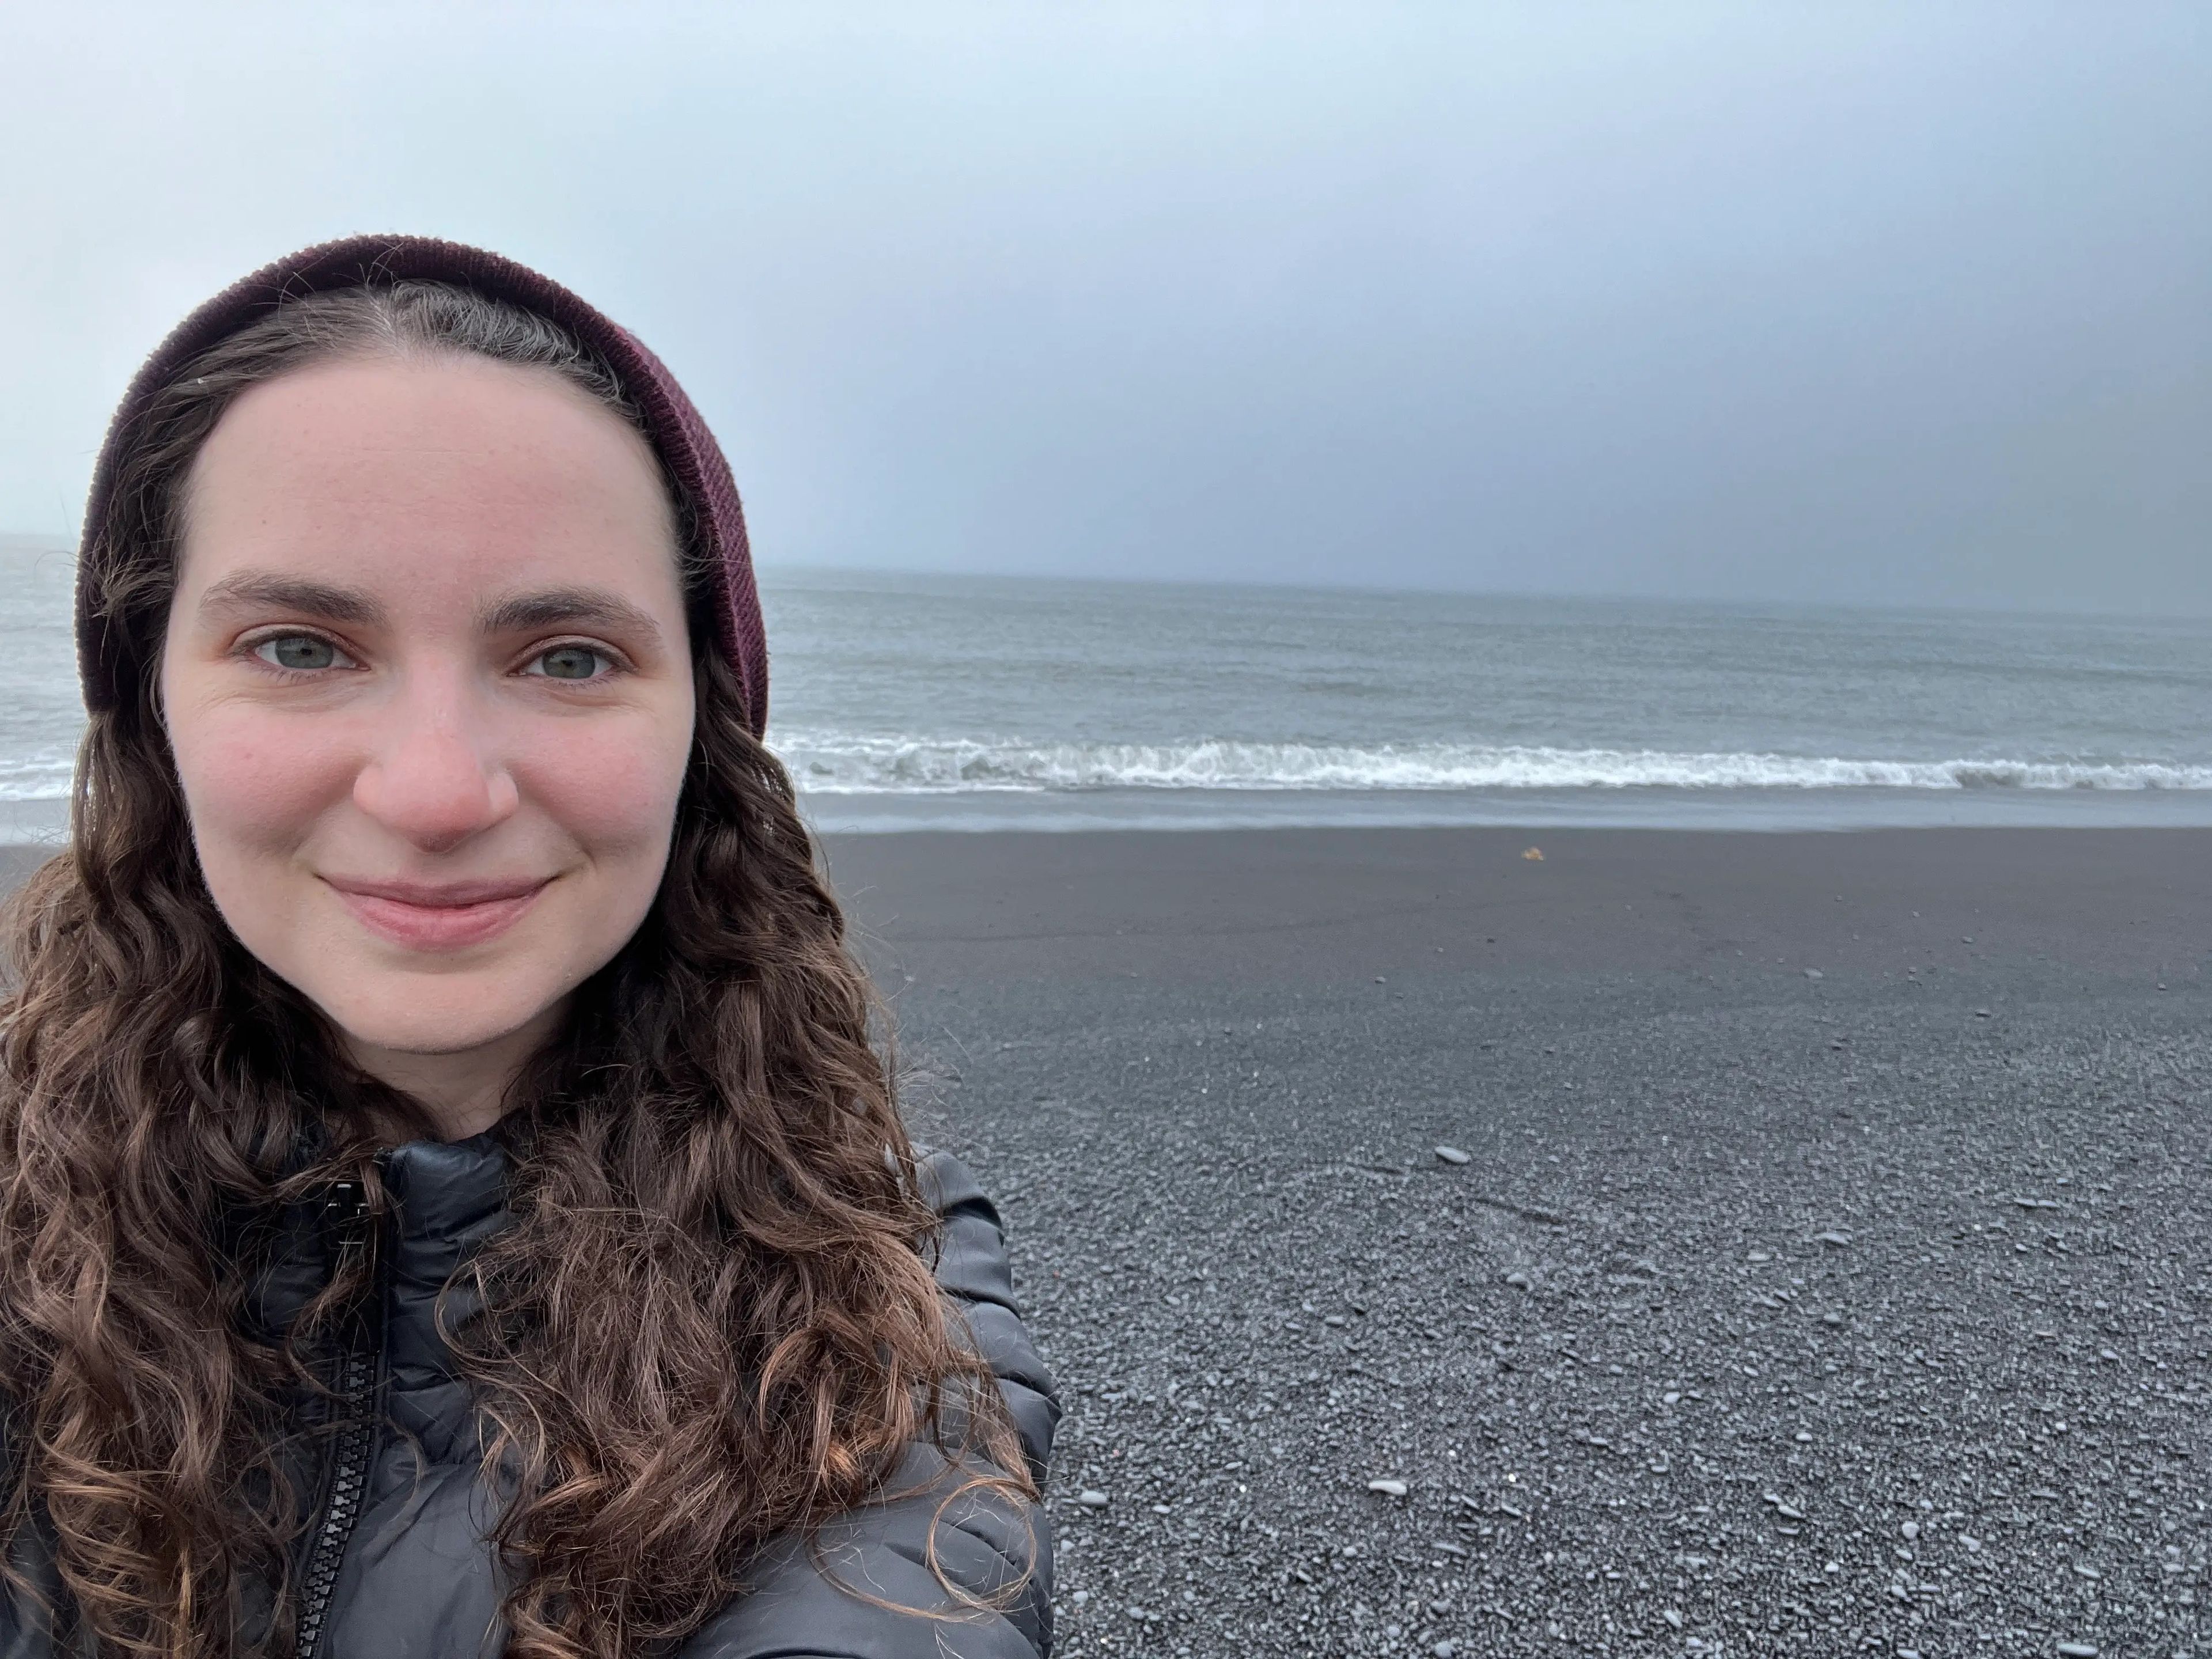 Talia Lakritz en una playa de arena negra en Islandia